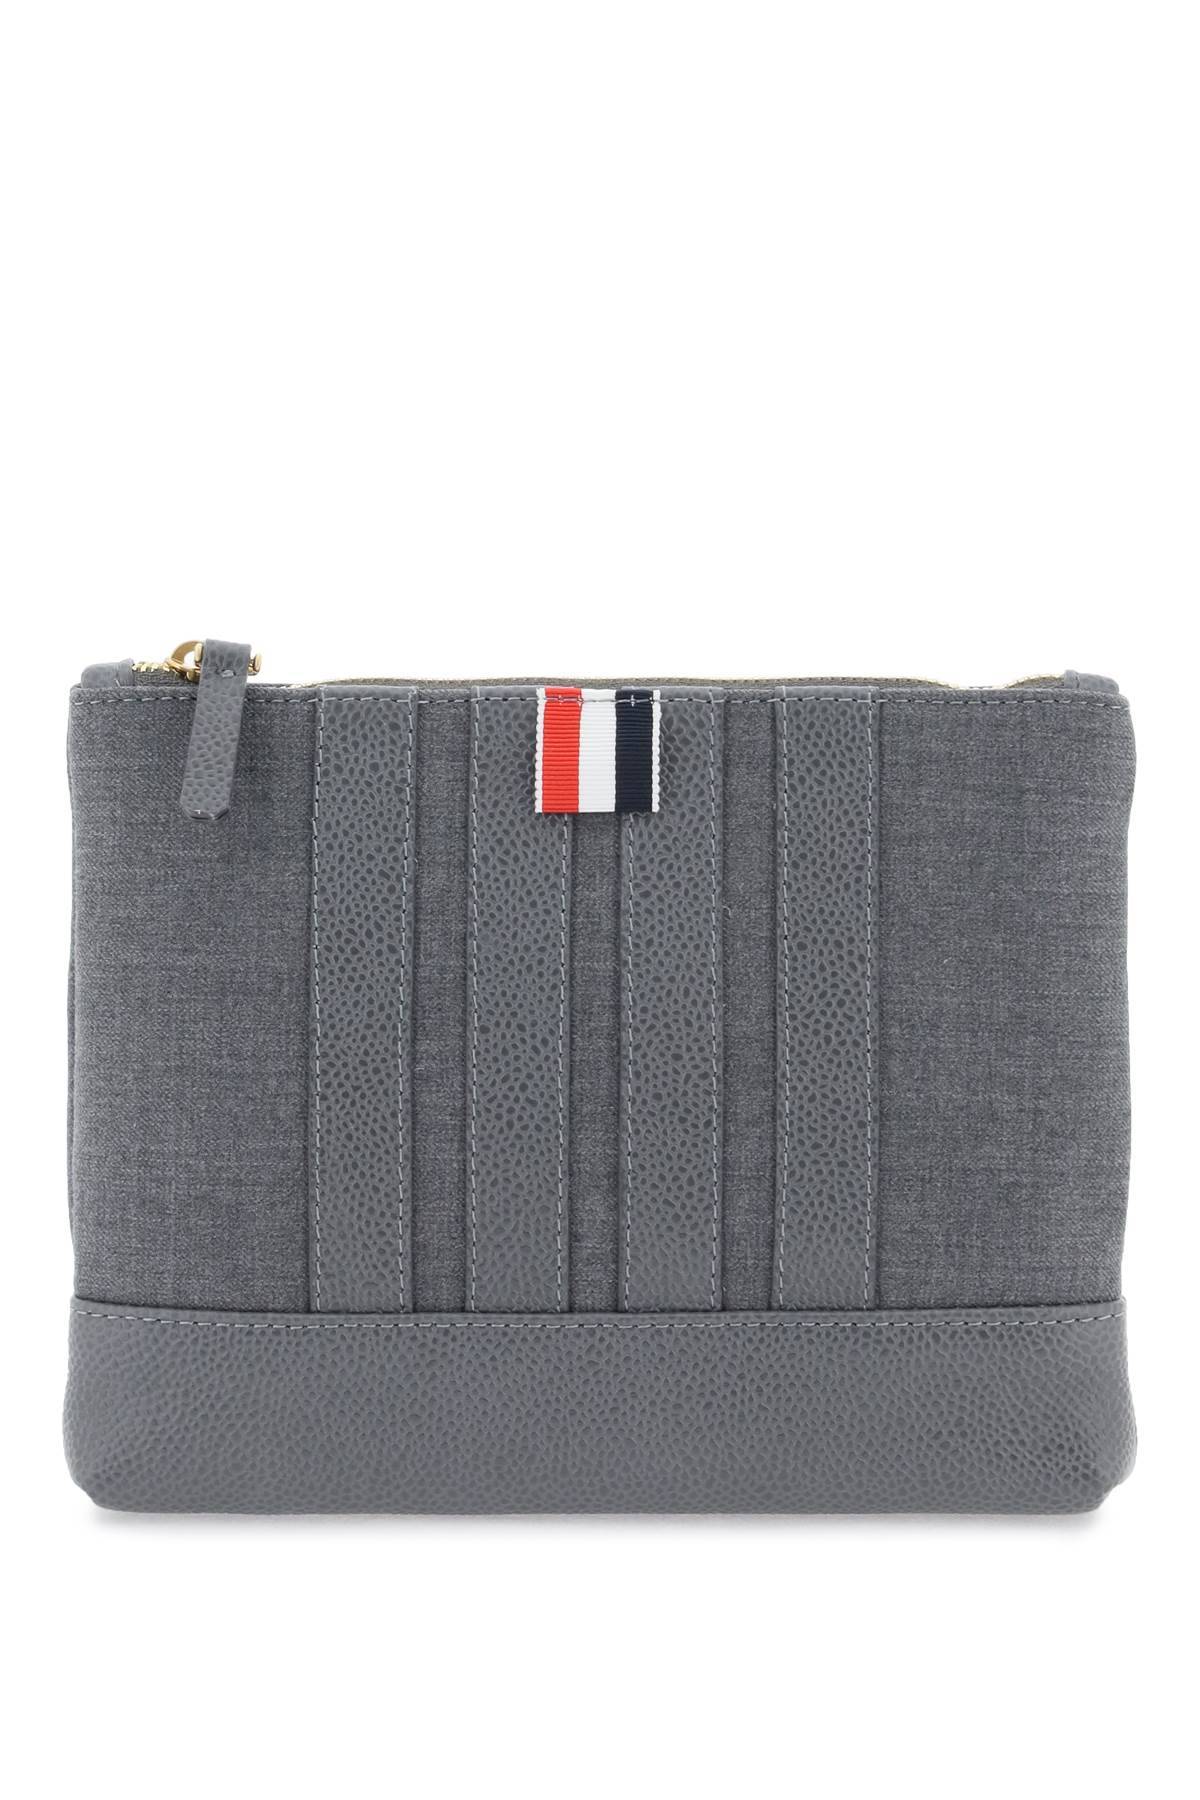 Thom Browne THOM BROWNE wool 4-bar small pouch